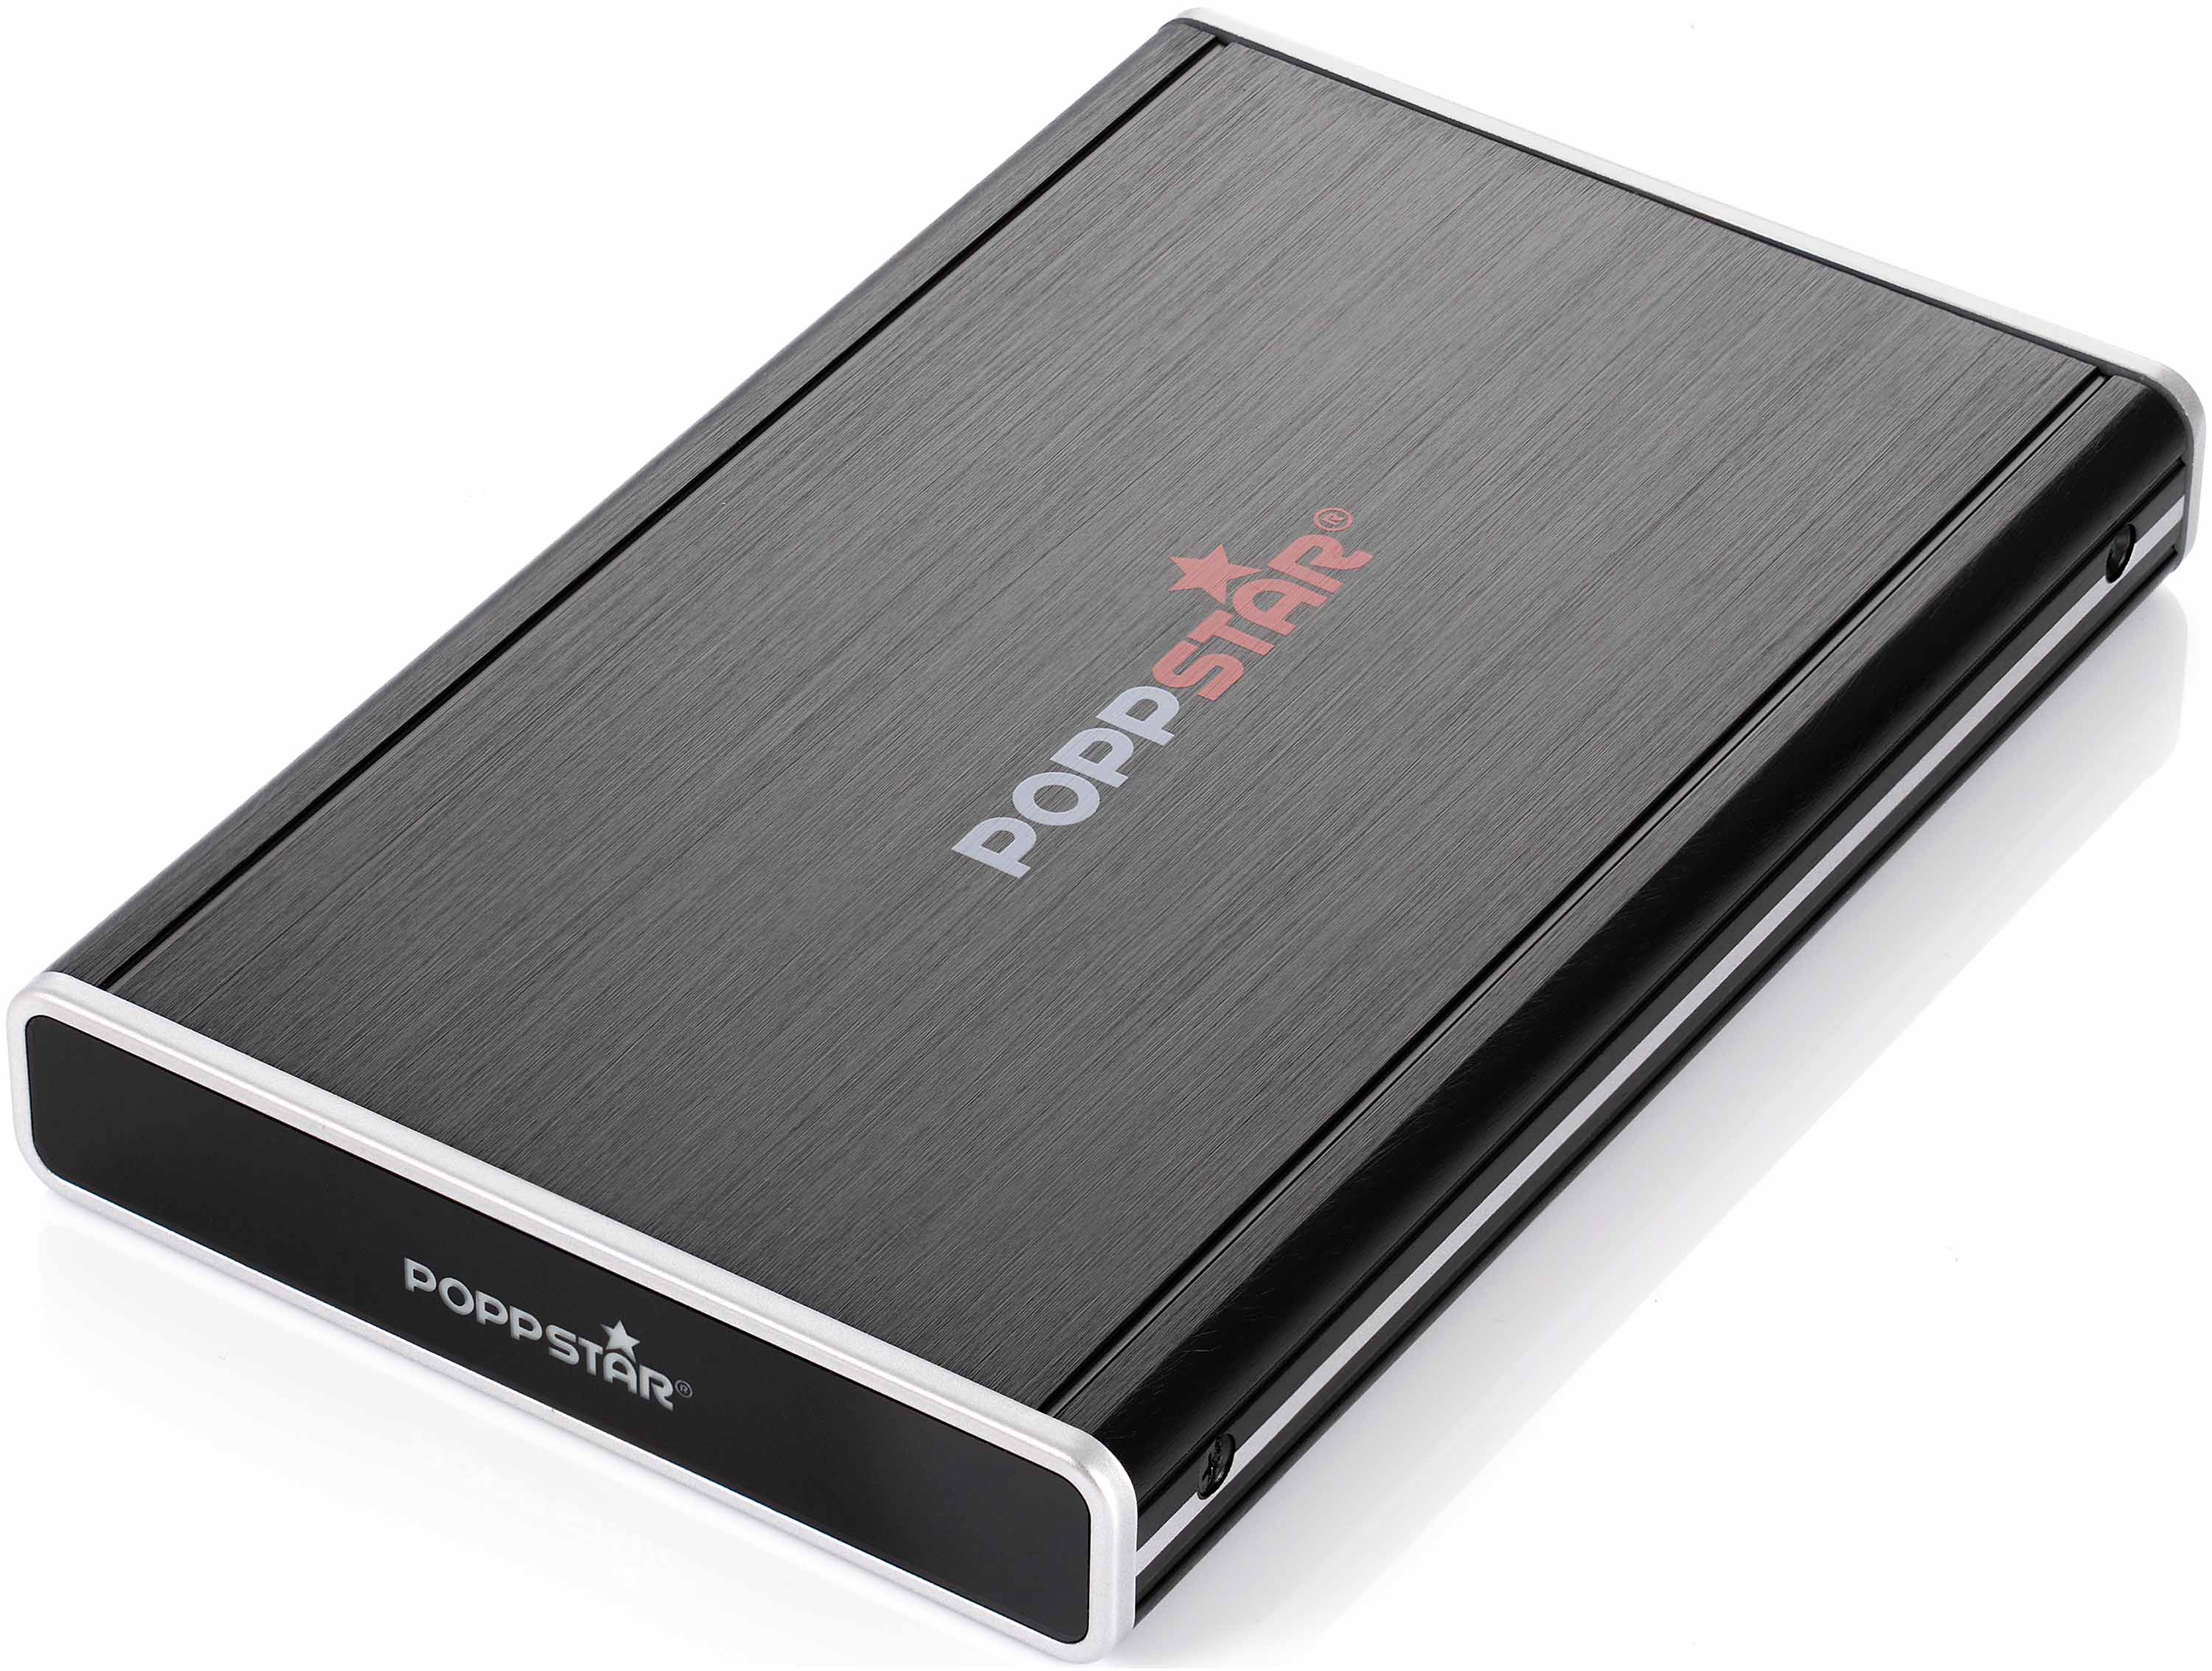 Poppstar SE15 SATA Festplattengehäuse (9,5mm/2,5") One Touch Backup schwarz Alu